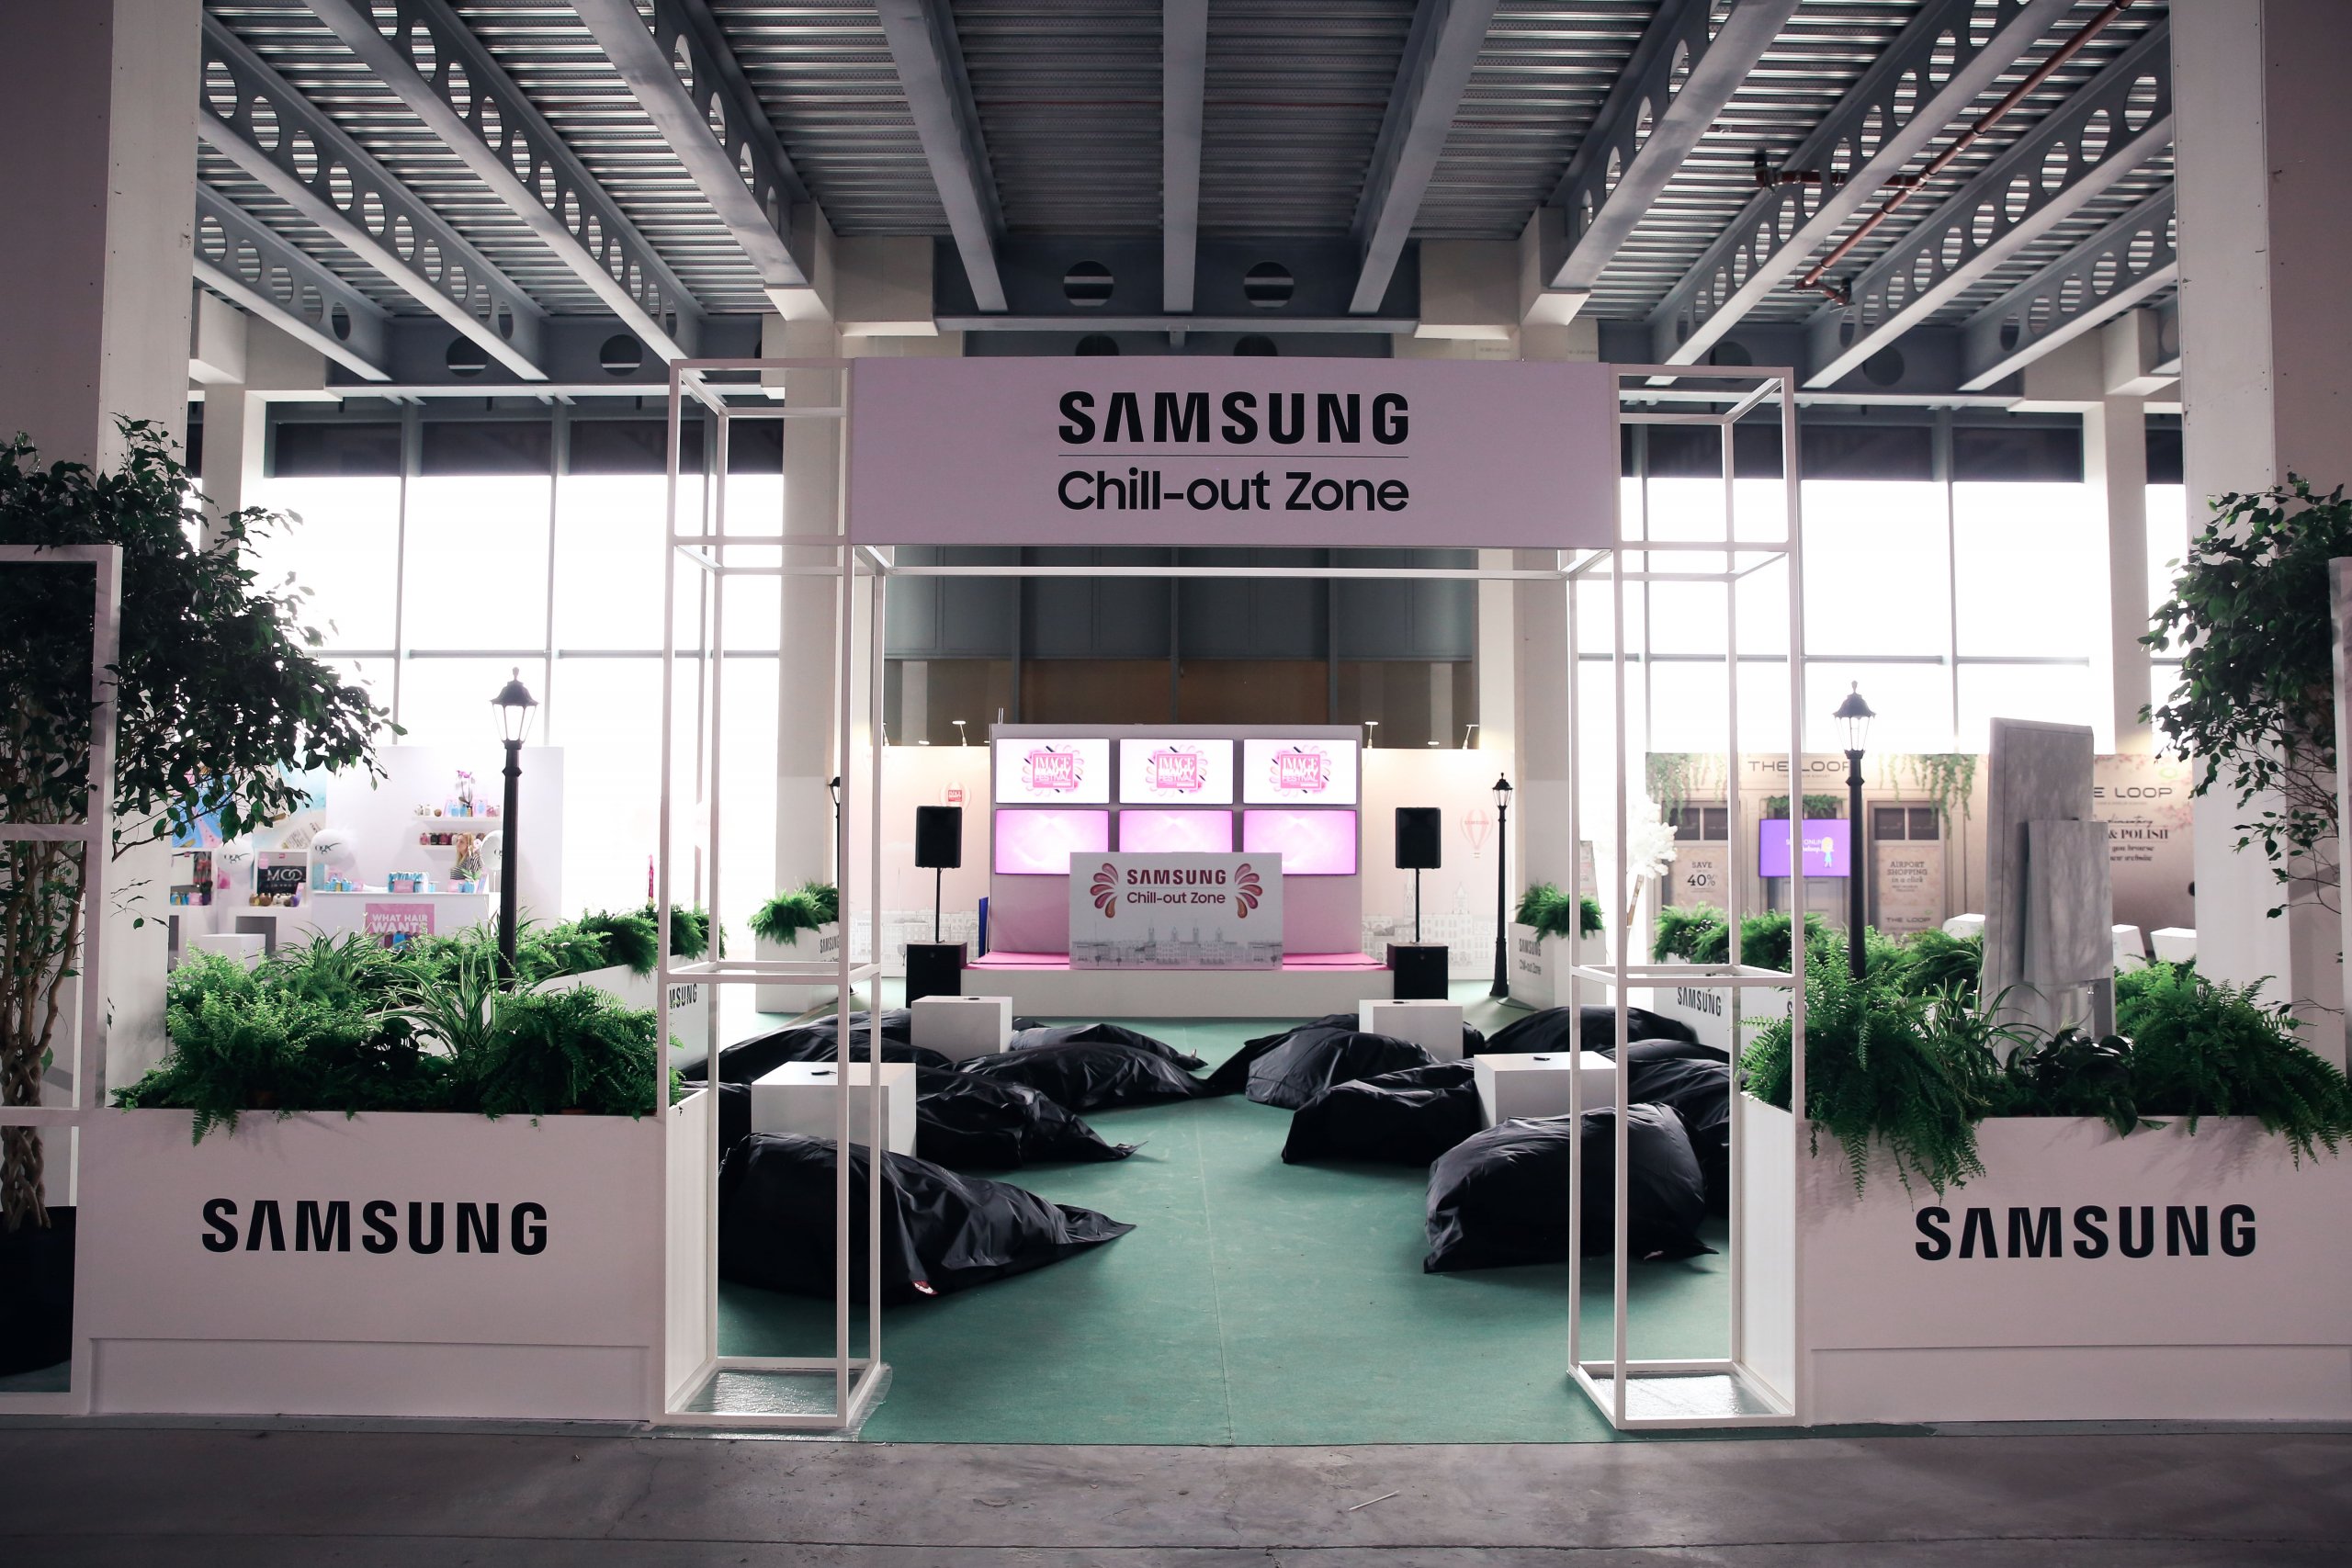 Samsung @ IMAGE Beauty Festival